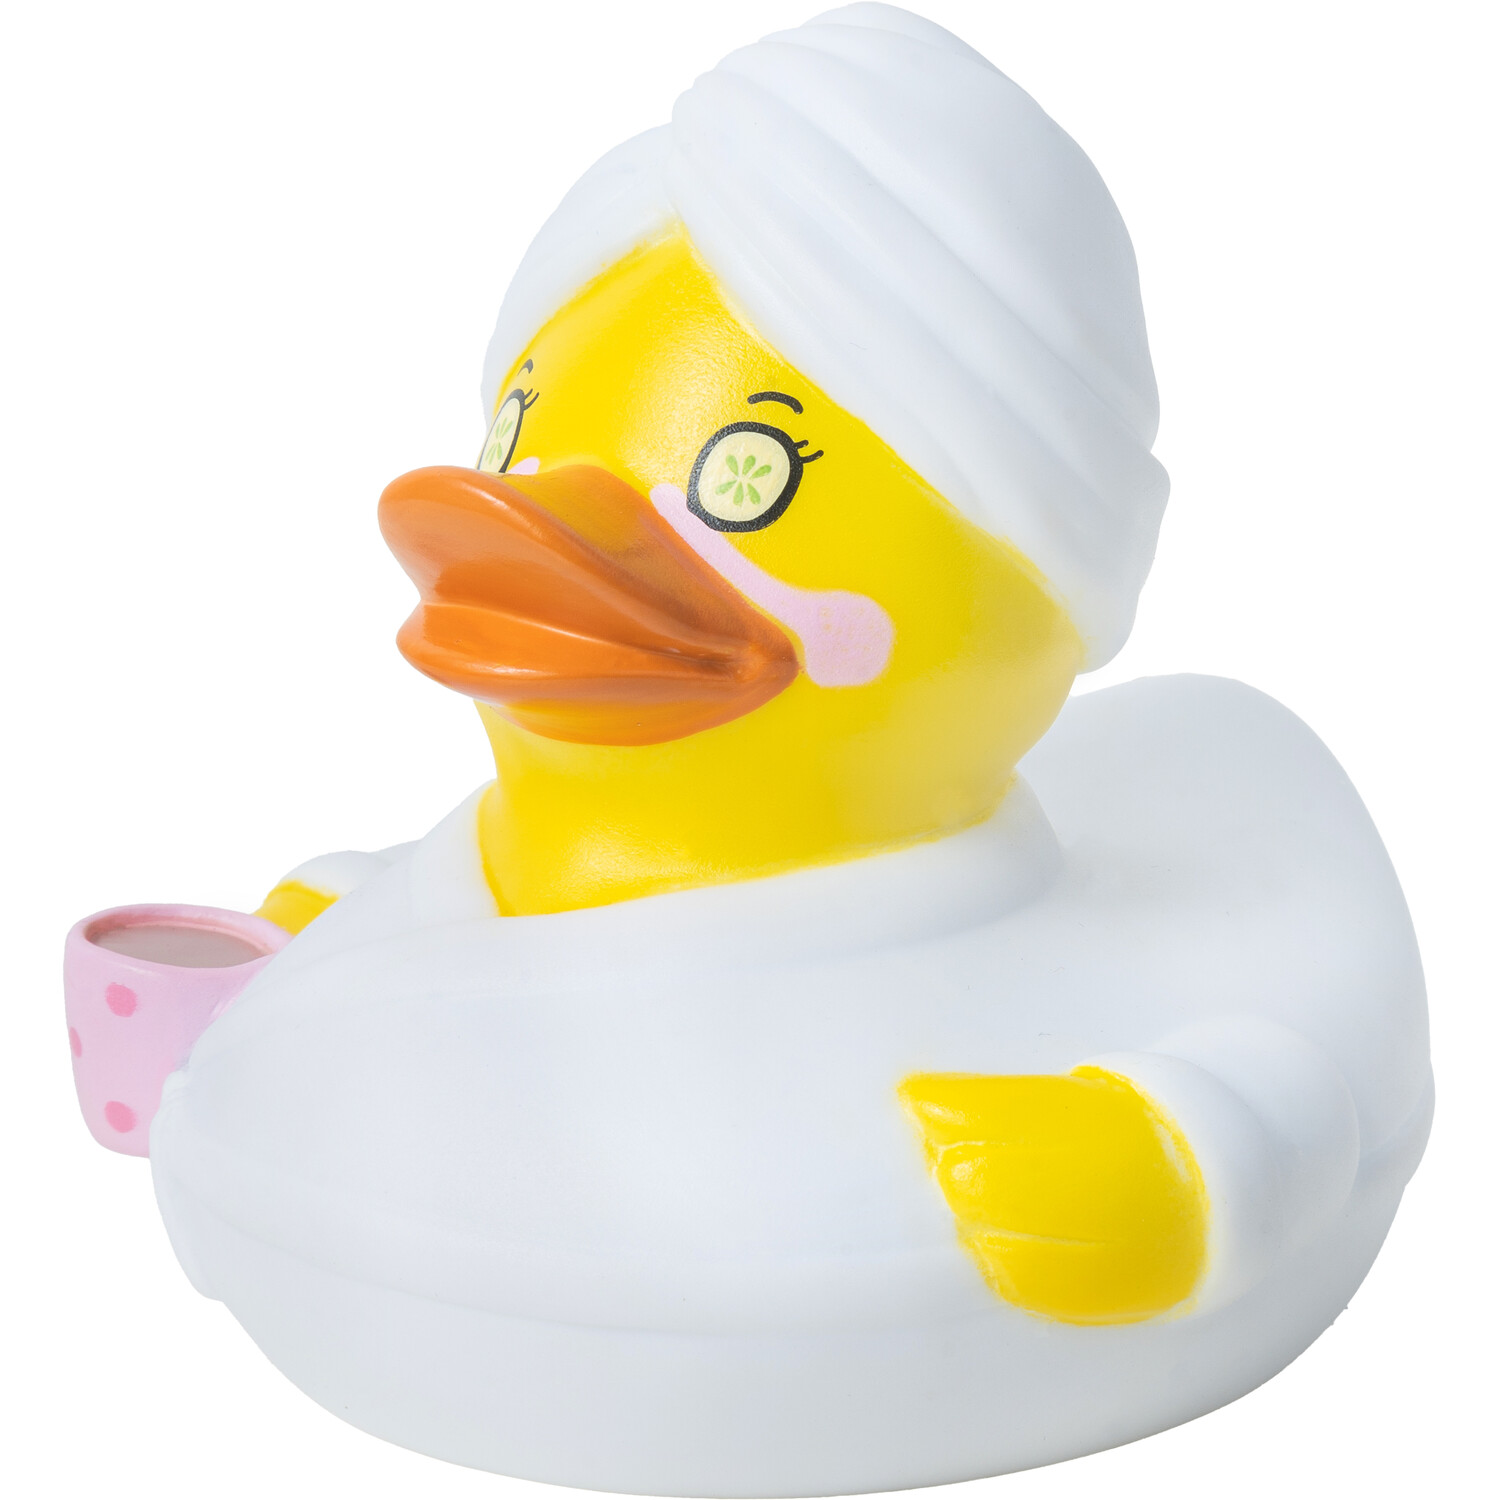 Spa Rubber Duck Image 2